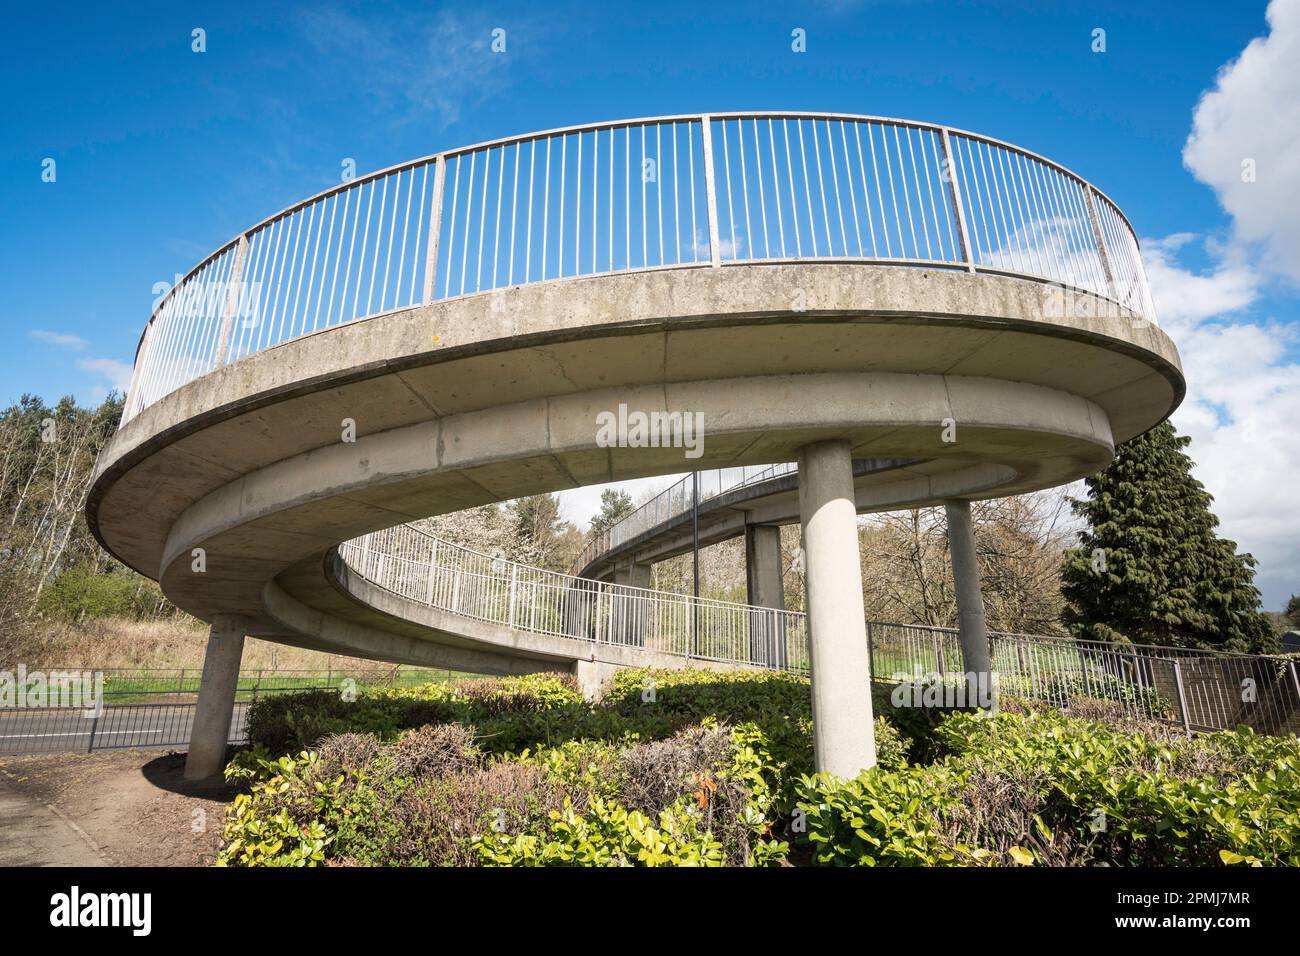 A spiral reinforced concrete footbridge in Fatfield, Washington, north east England, UK Stock Photo